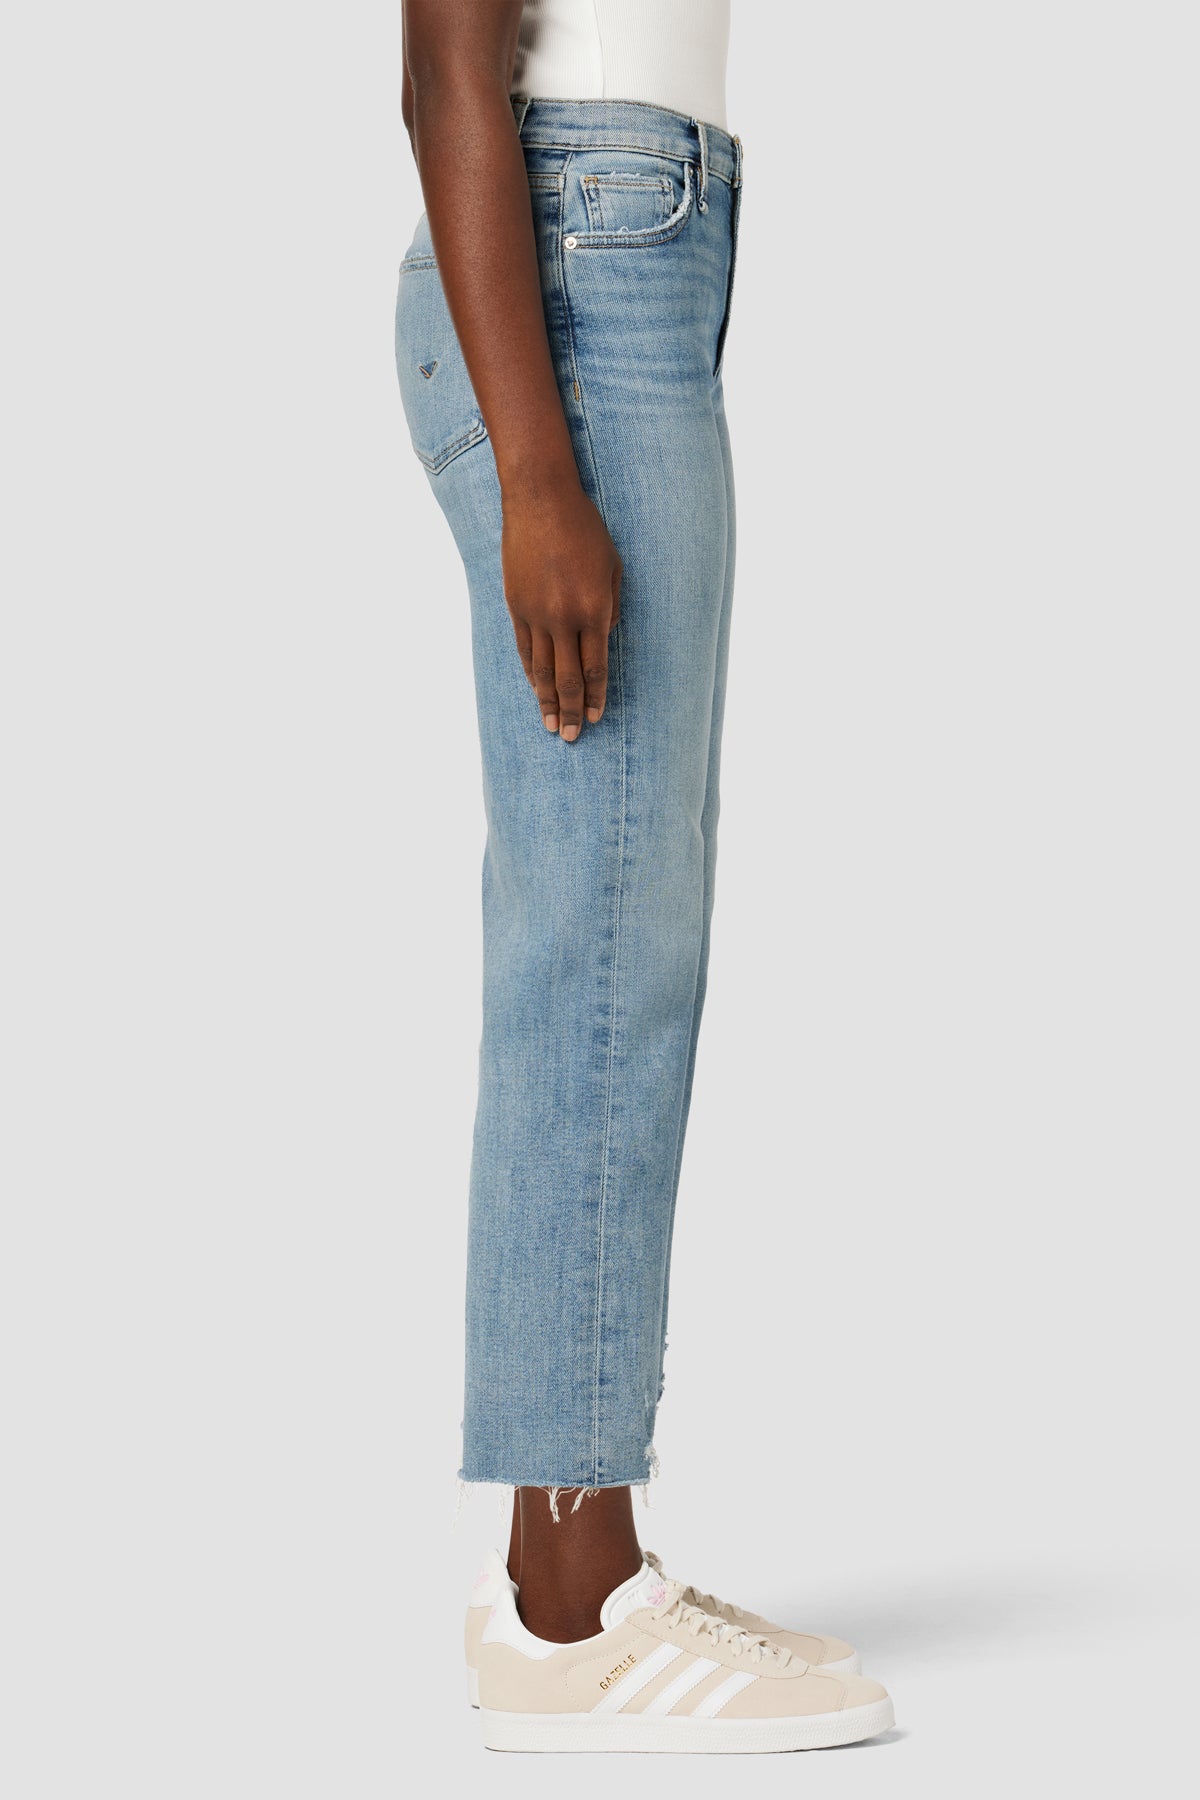 Remi High-Rise Straight Crop Jean